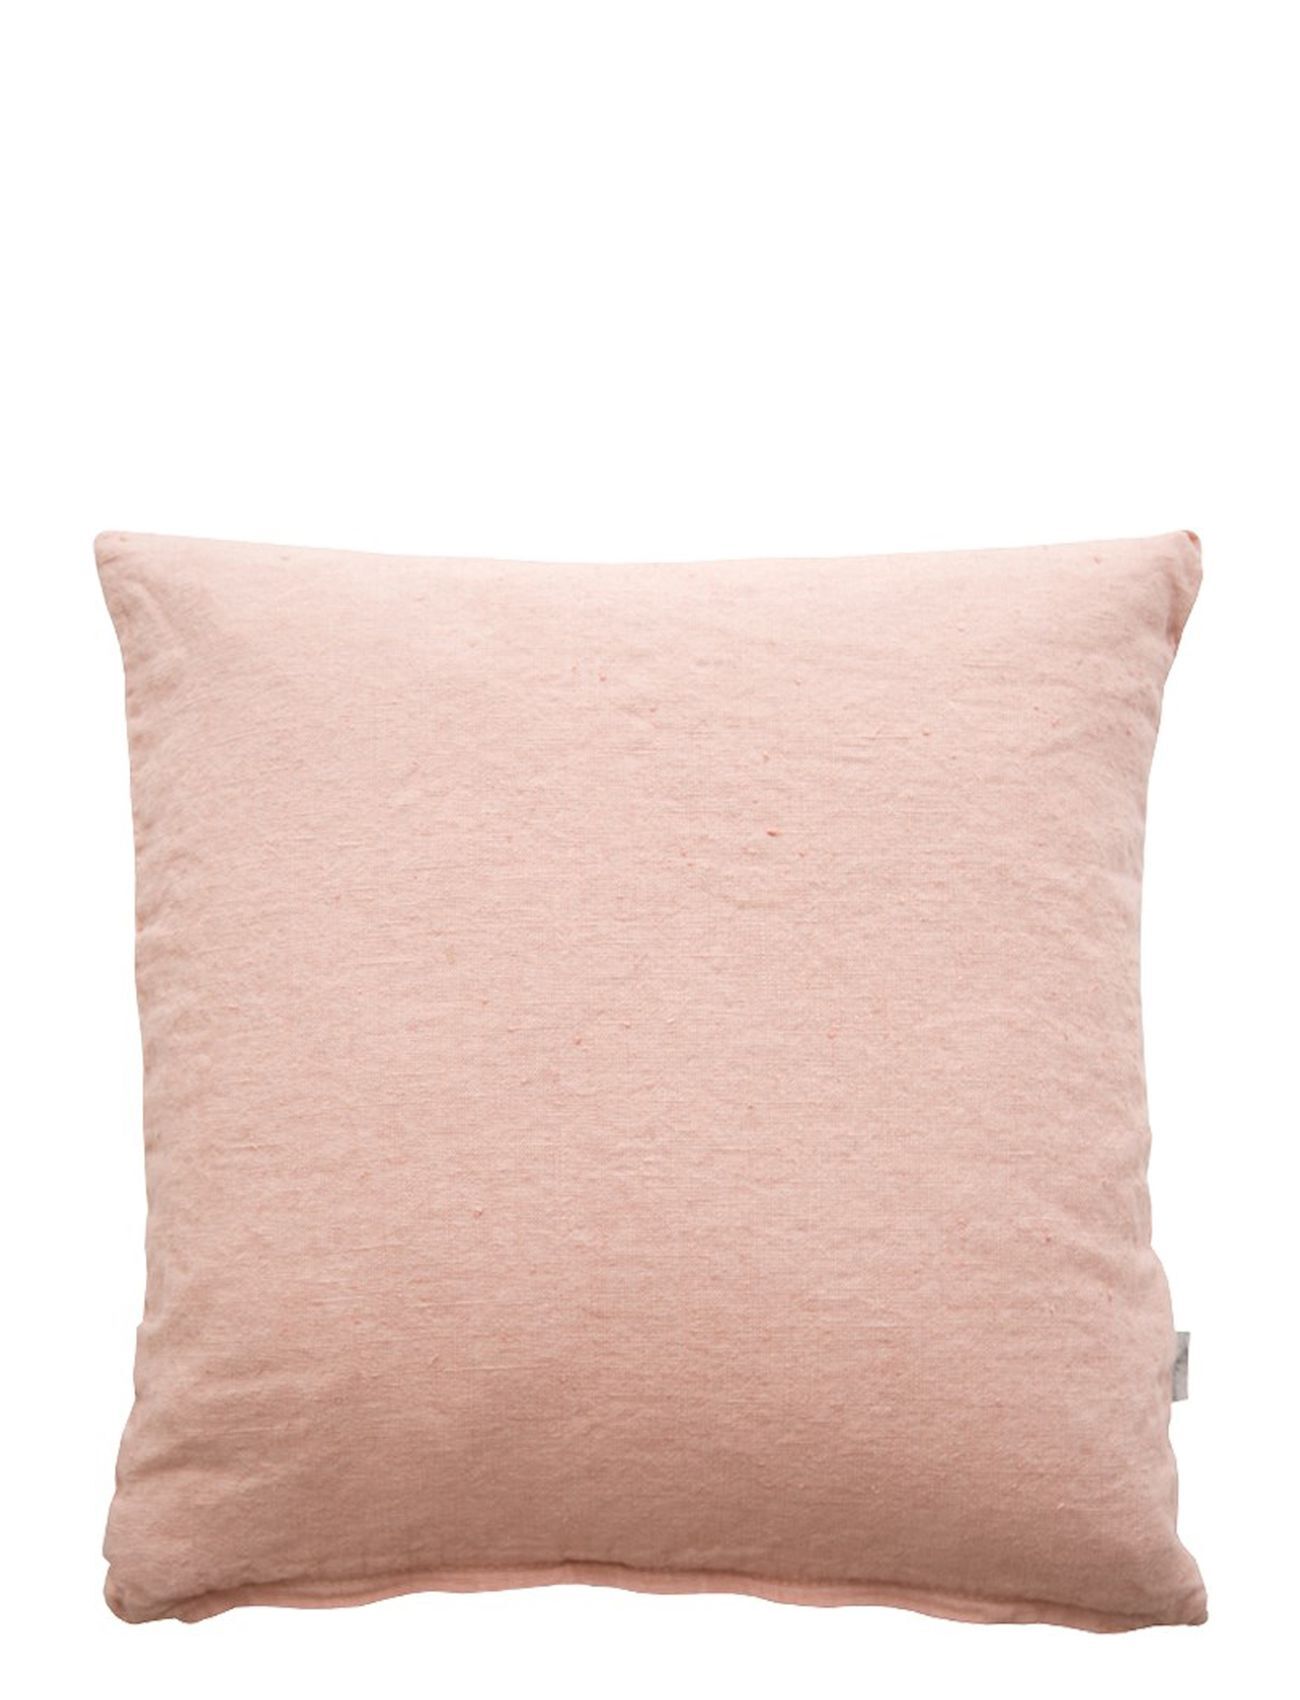 Au Maison Cushion Cover Linen Basic Washed Home Textiles Cushions & Blankets Cushion Covers Rosa Au Maison